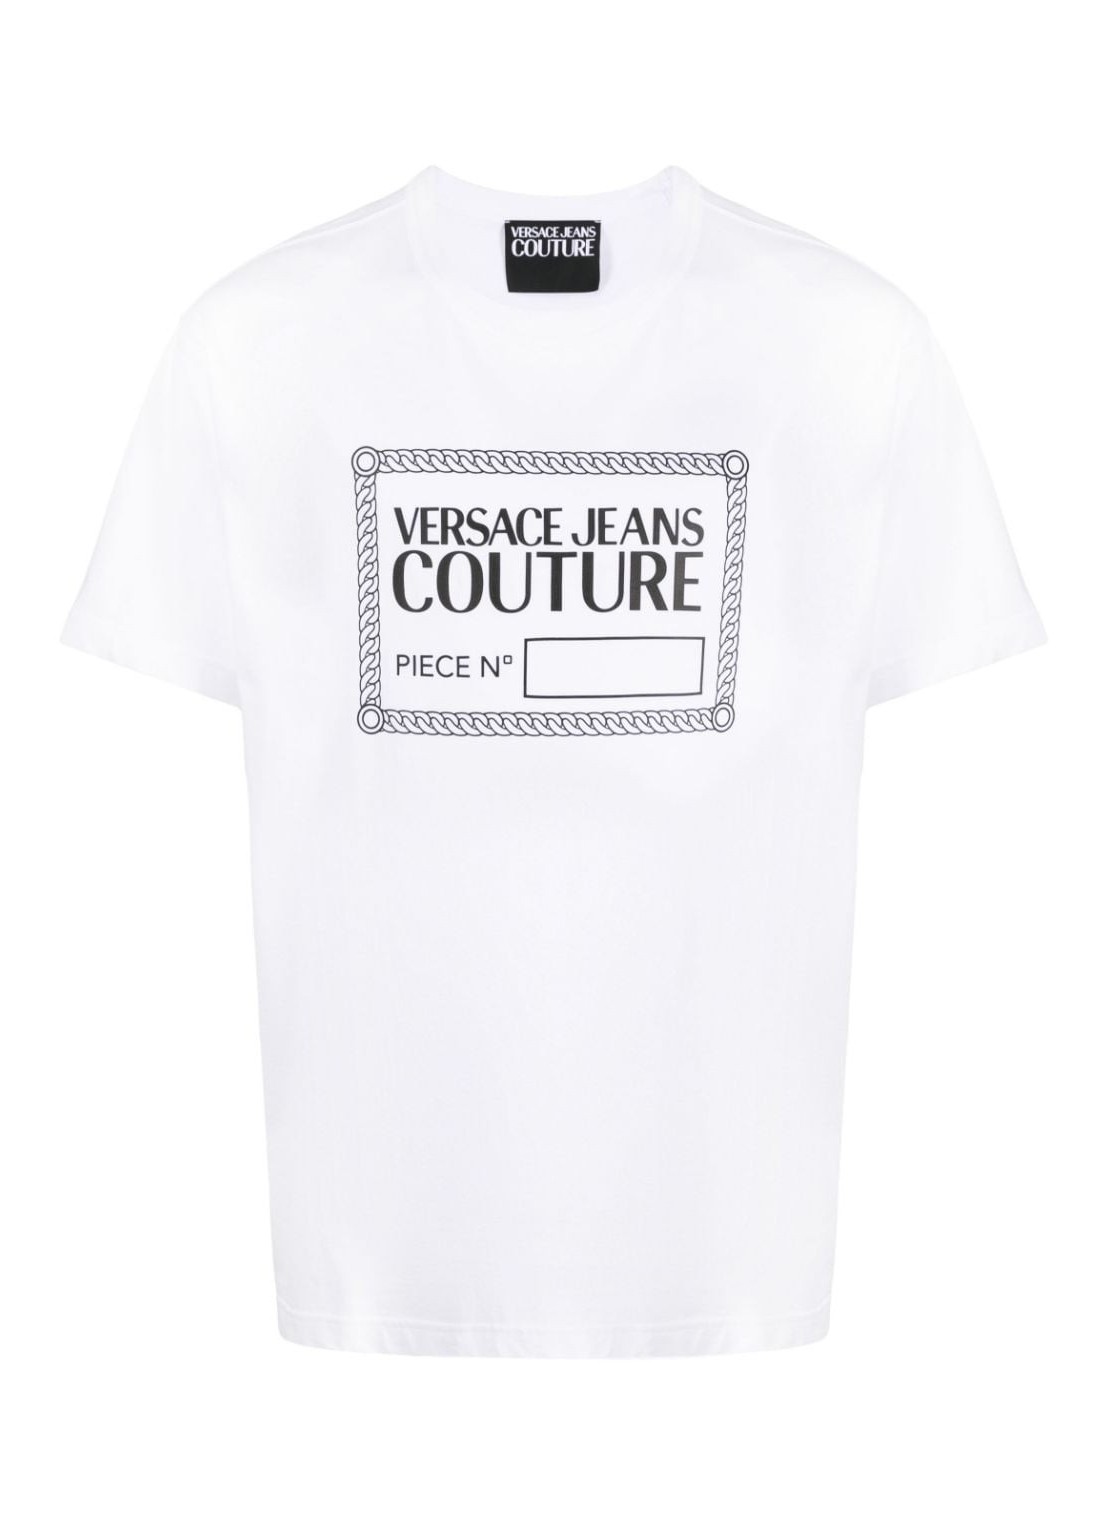 Camiseta versace t-shirt man 75up601 r piece nr rubber 75gaht09 003 talla S
 